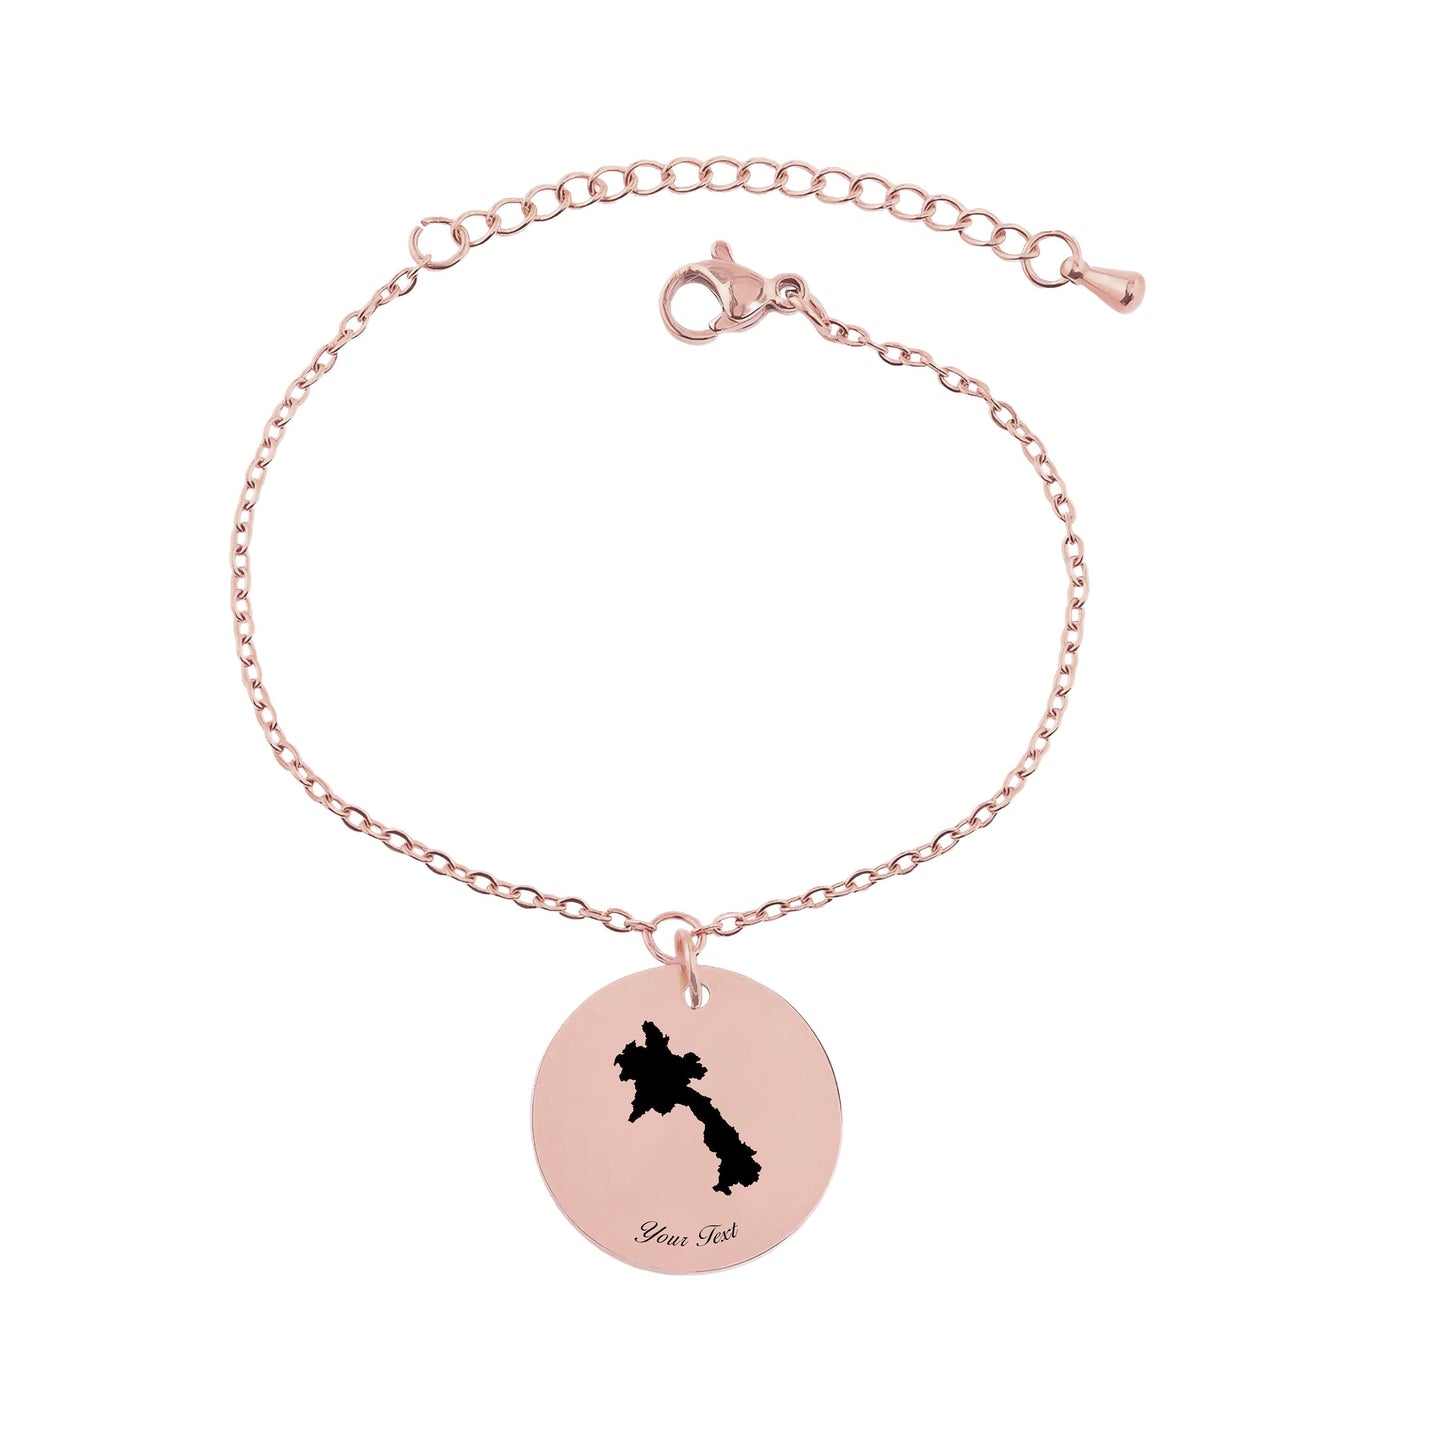 Laos Country Map Bracelet, Your Name Bracelet, Minimalist Bracelet, Personalized Gift, 14K Gold Bracelet, Gift For Him Her